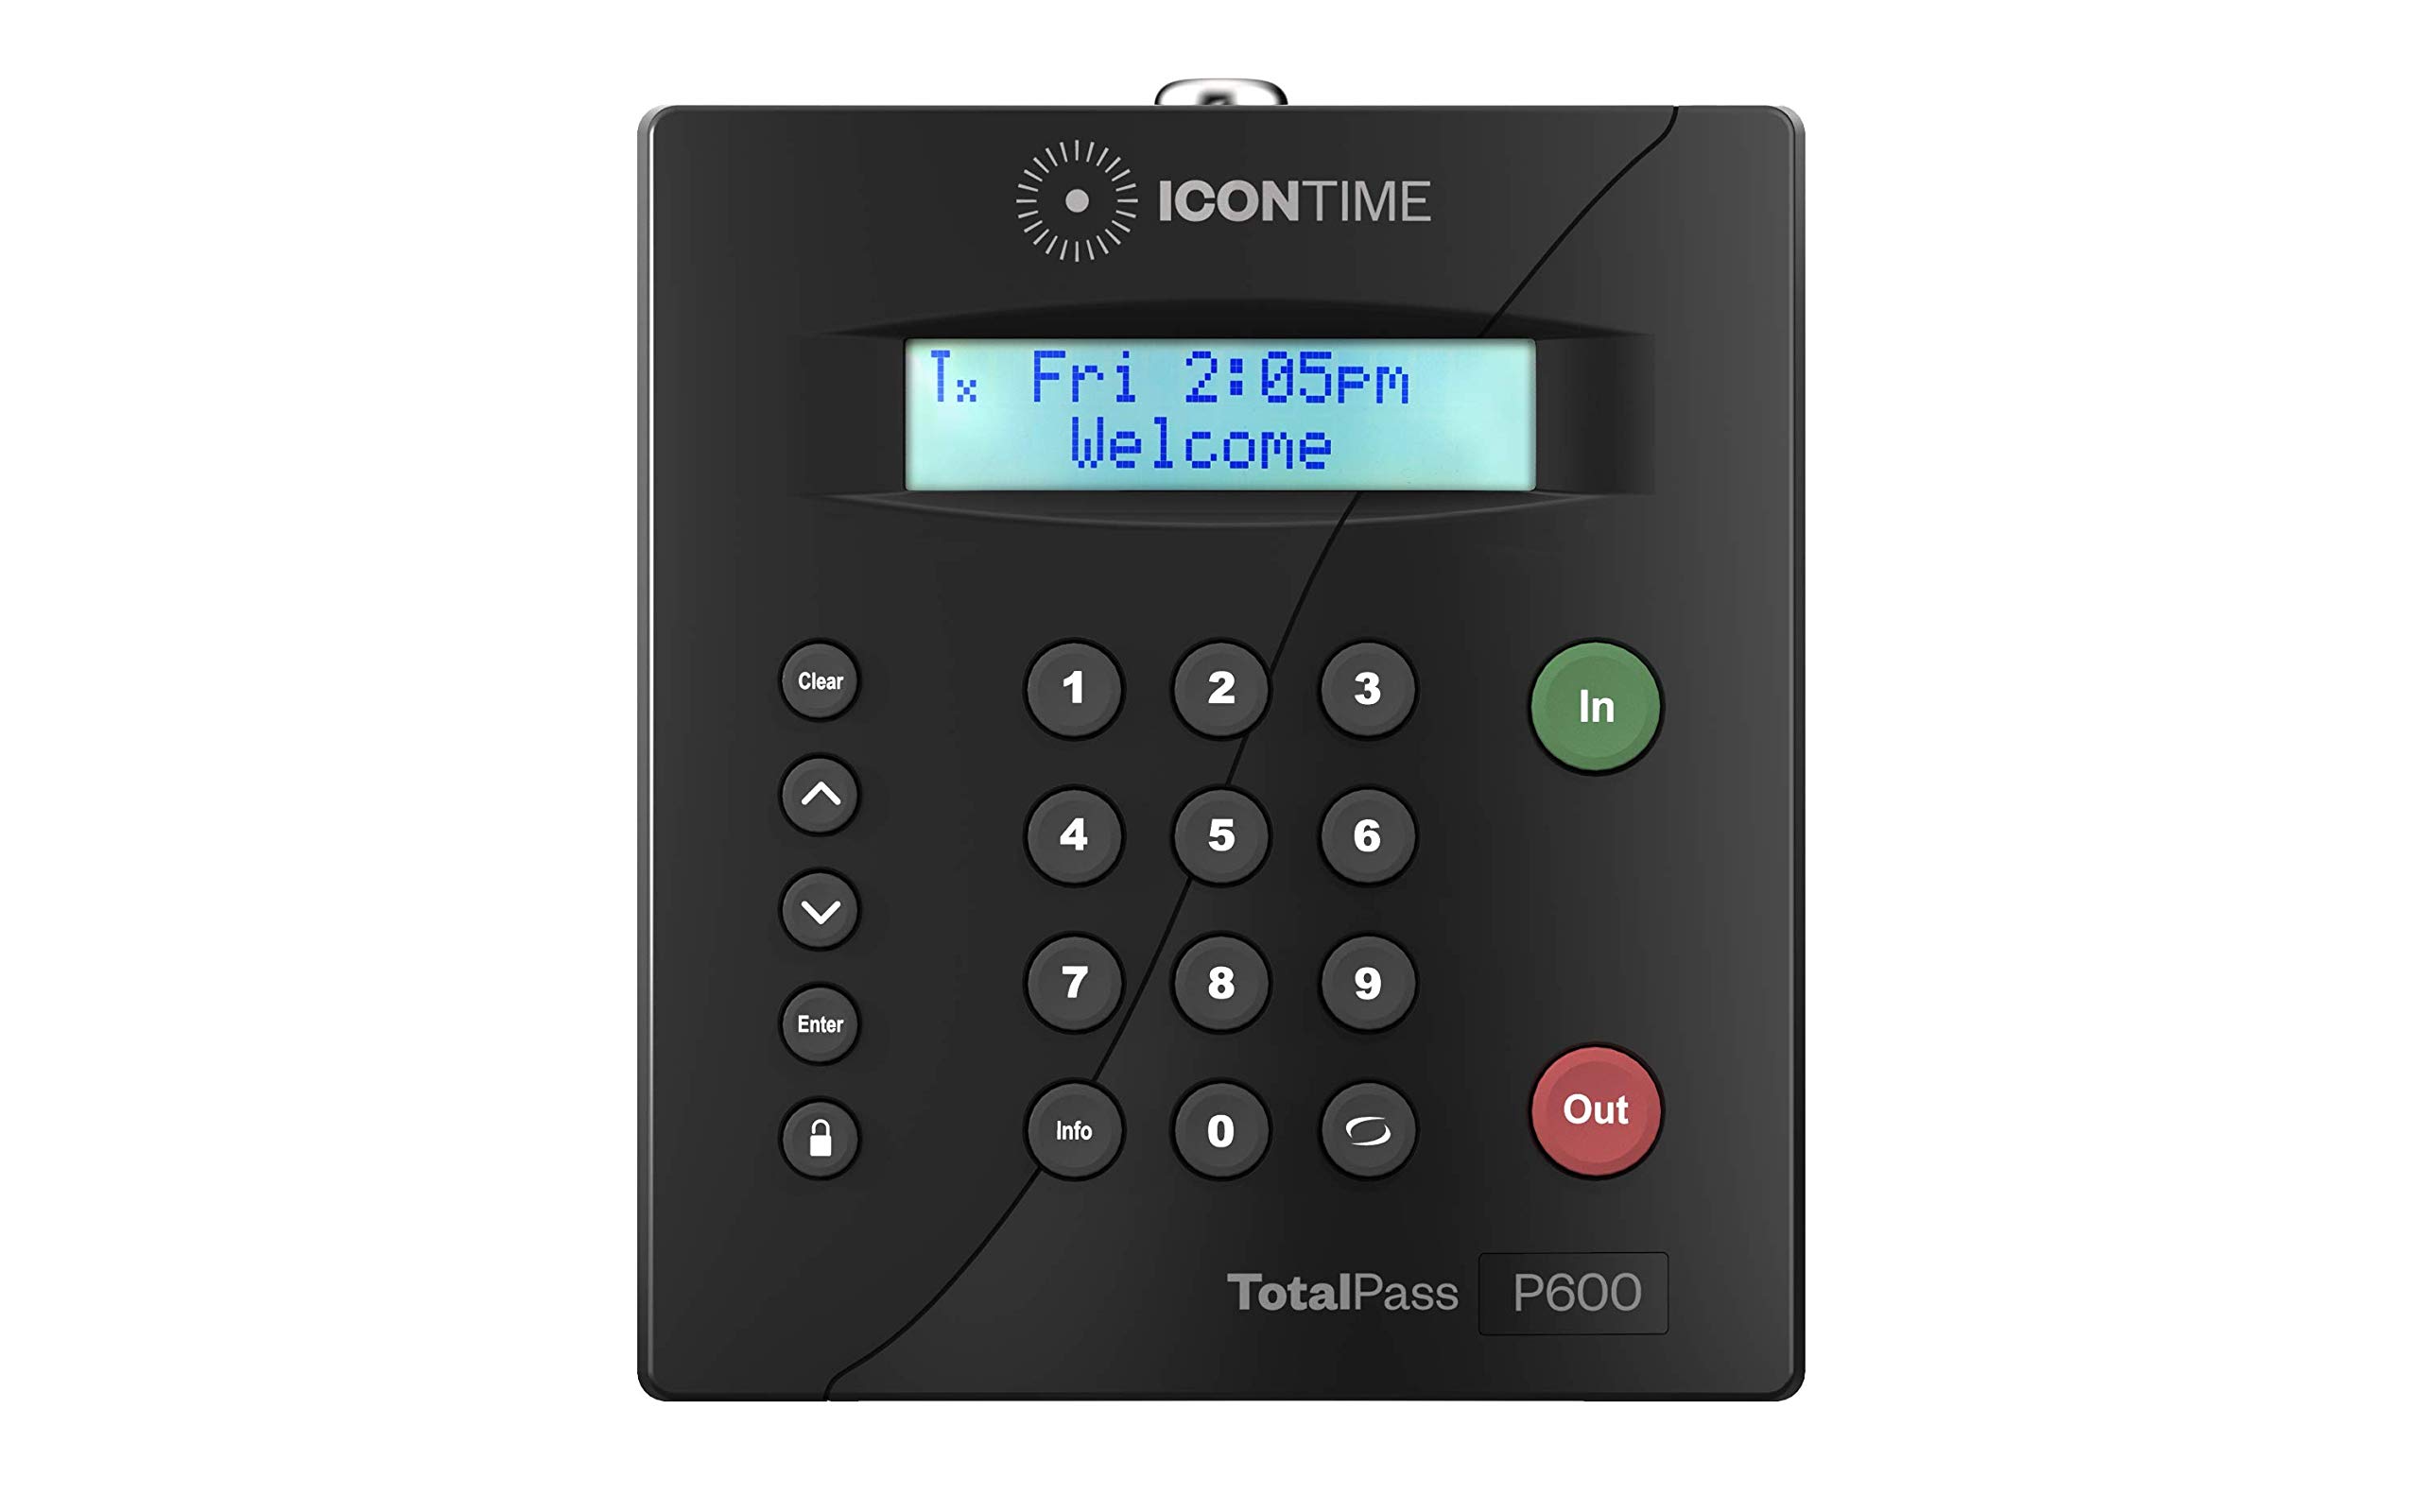 Icon Time Systems TotalPass P600 员工考勤钟 |美国制造|开箱即用 |通过 USB、网络、Wi-Fi 或 Web 管理考勤卡|时钟输入选项 PIN 码键盘、RFID 徽章或网络|无月费